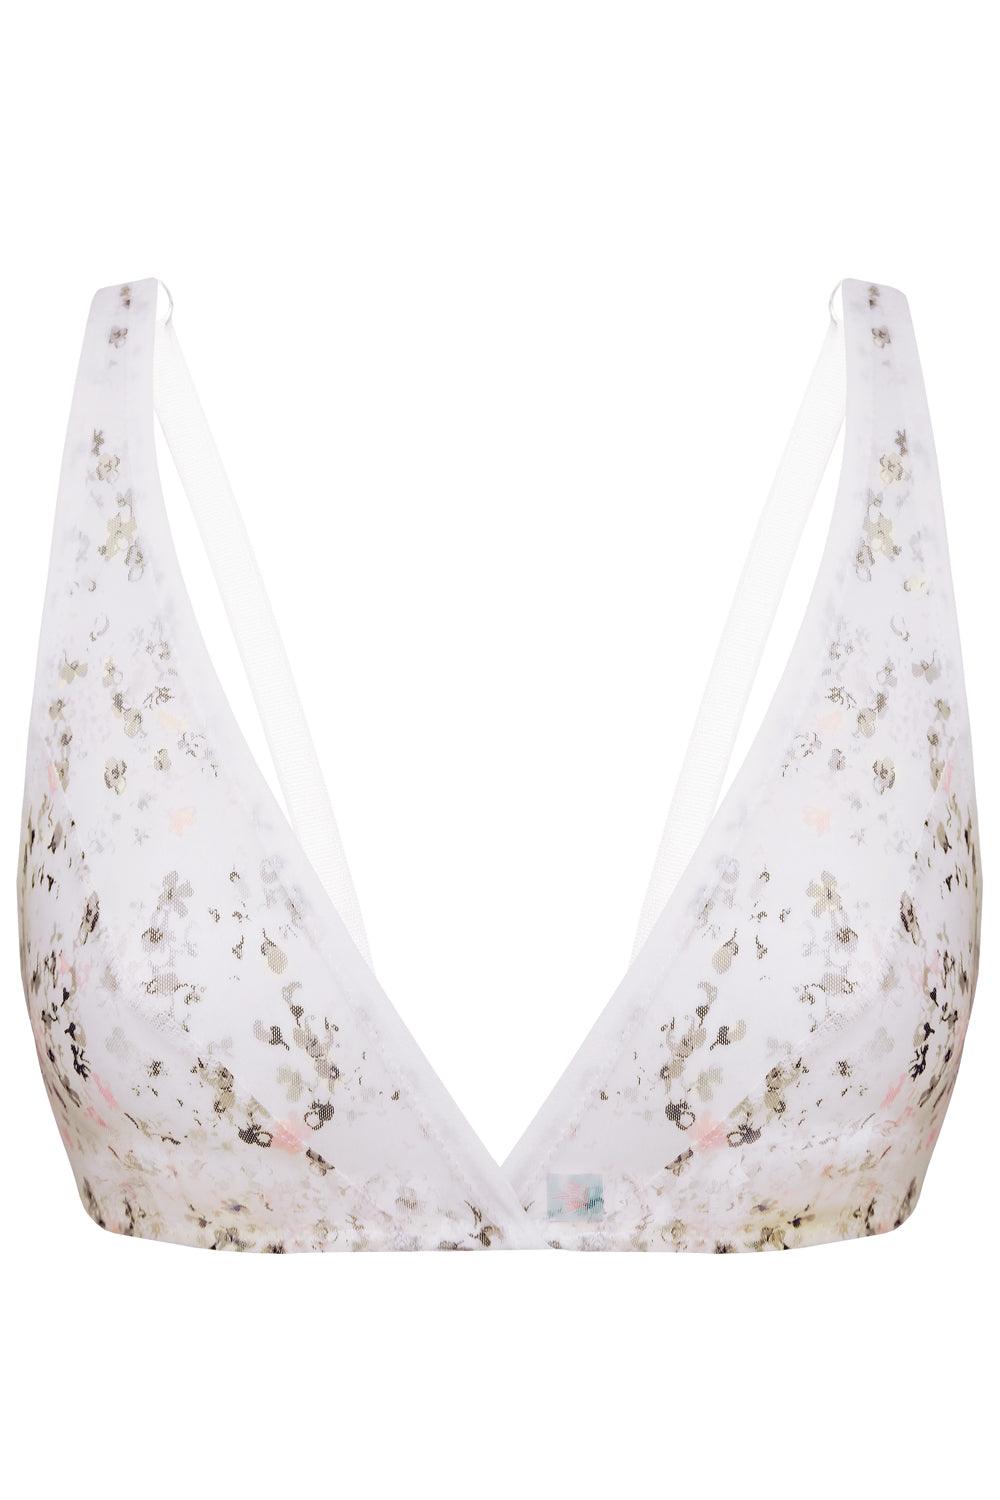 Ivory Dream soft bra - Bra by WOW! Panties. Shop on yesUndress